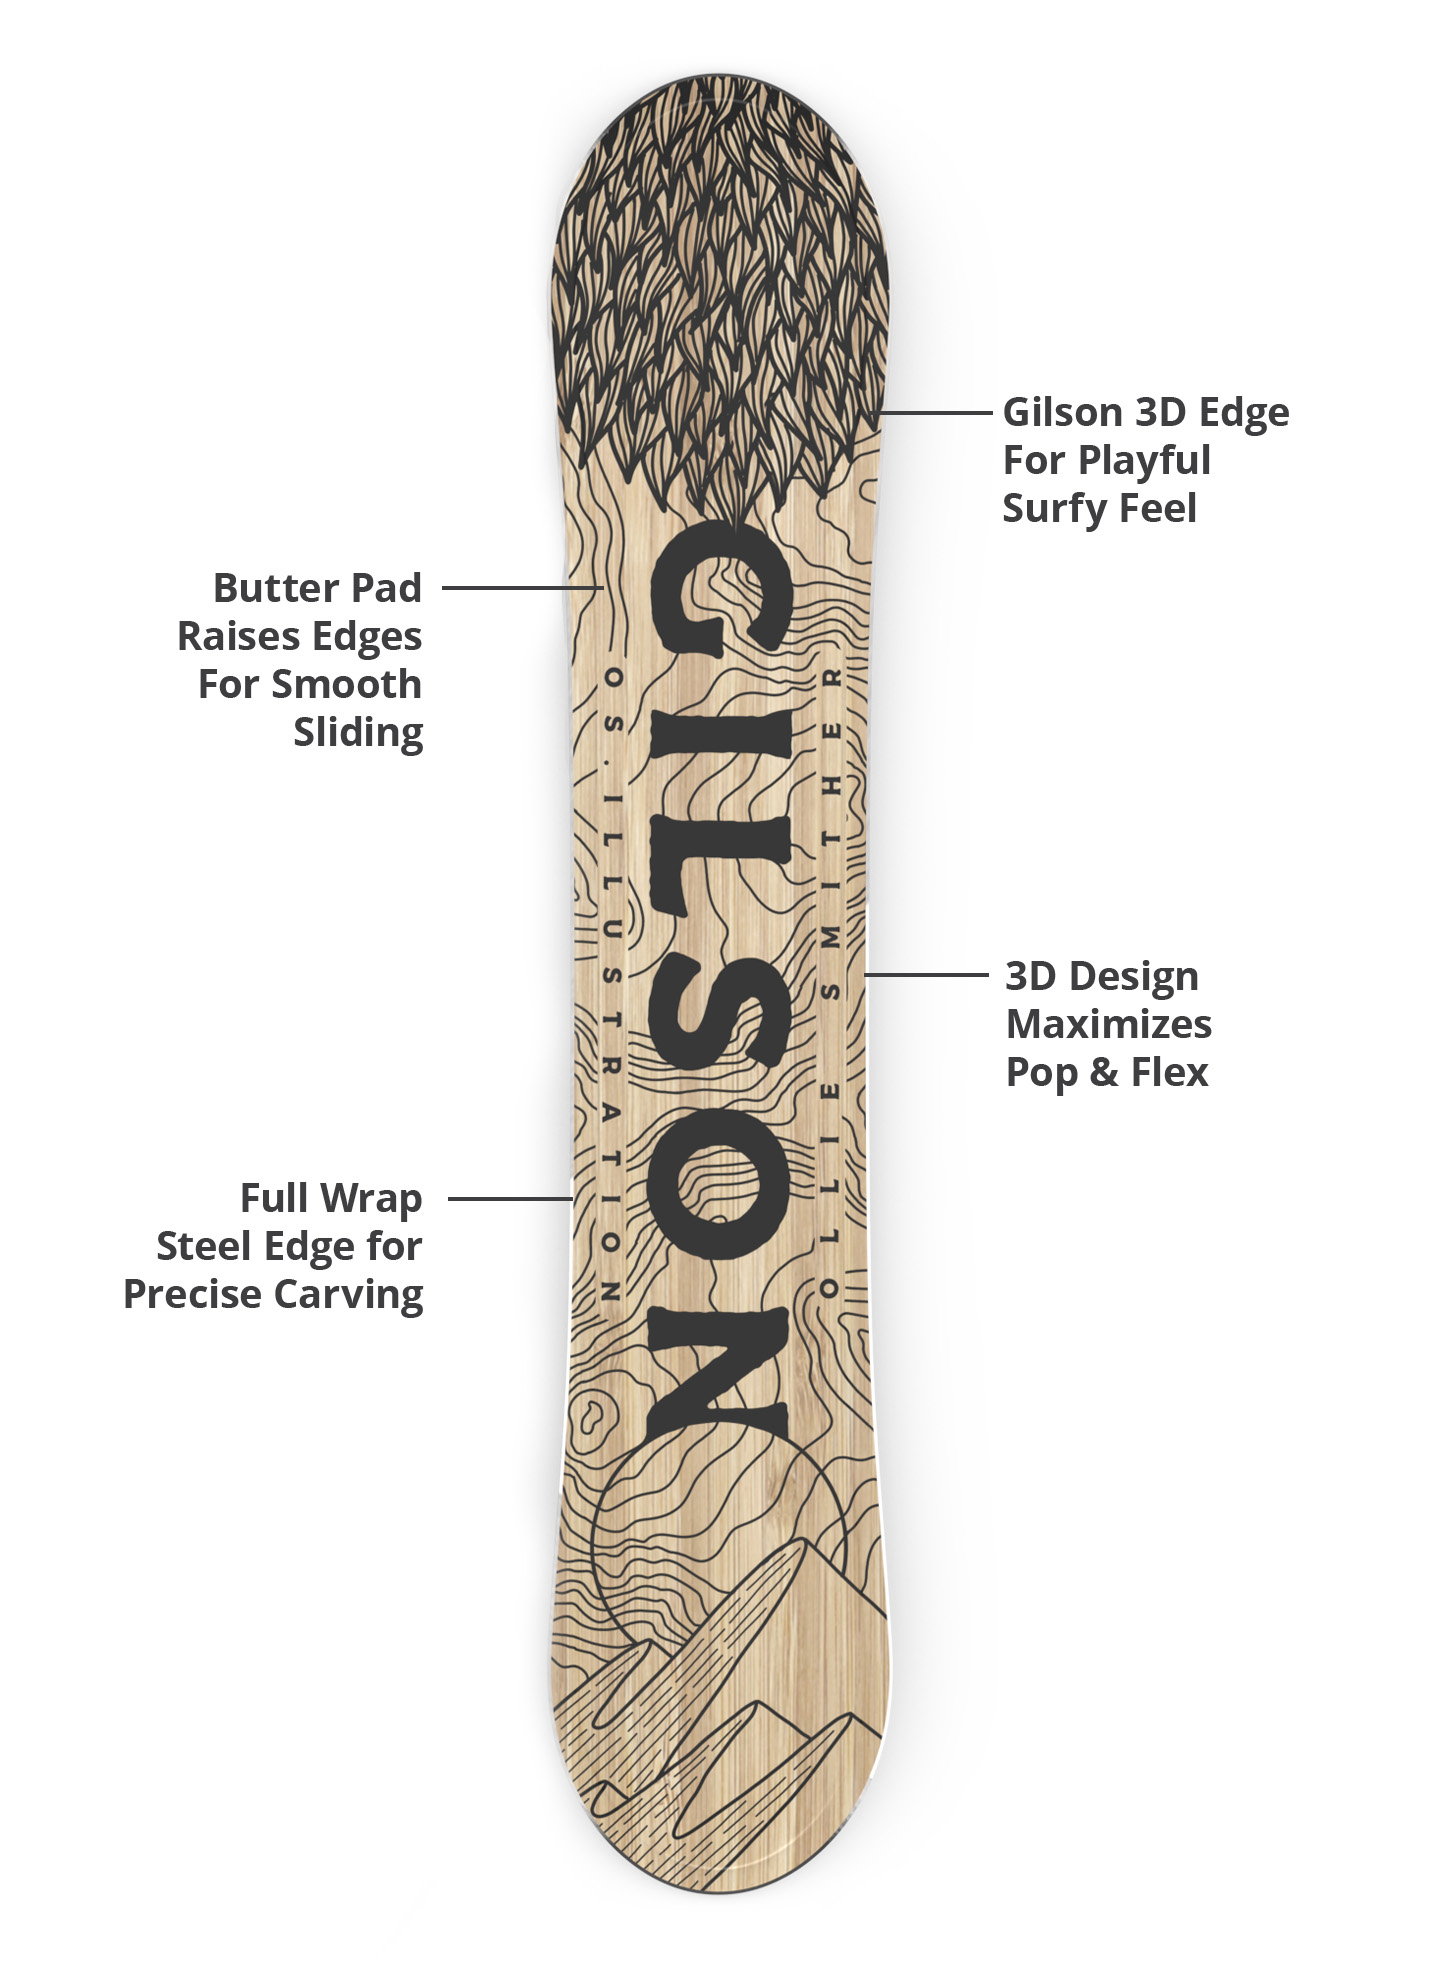 Gilson 3D edge, flex profile, and steel edge diagram